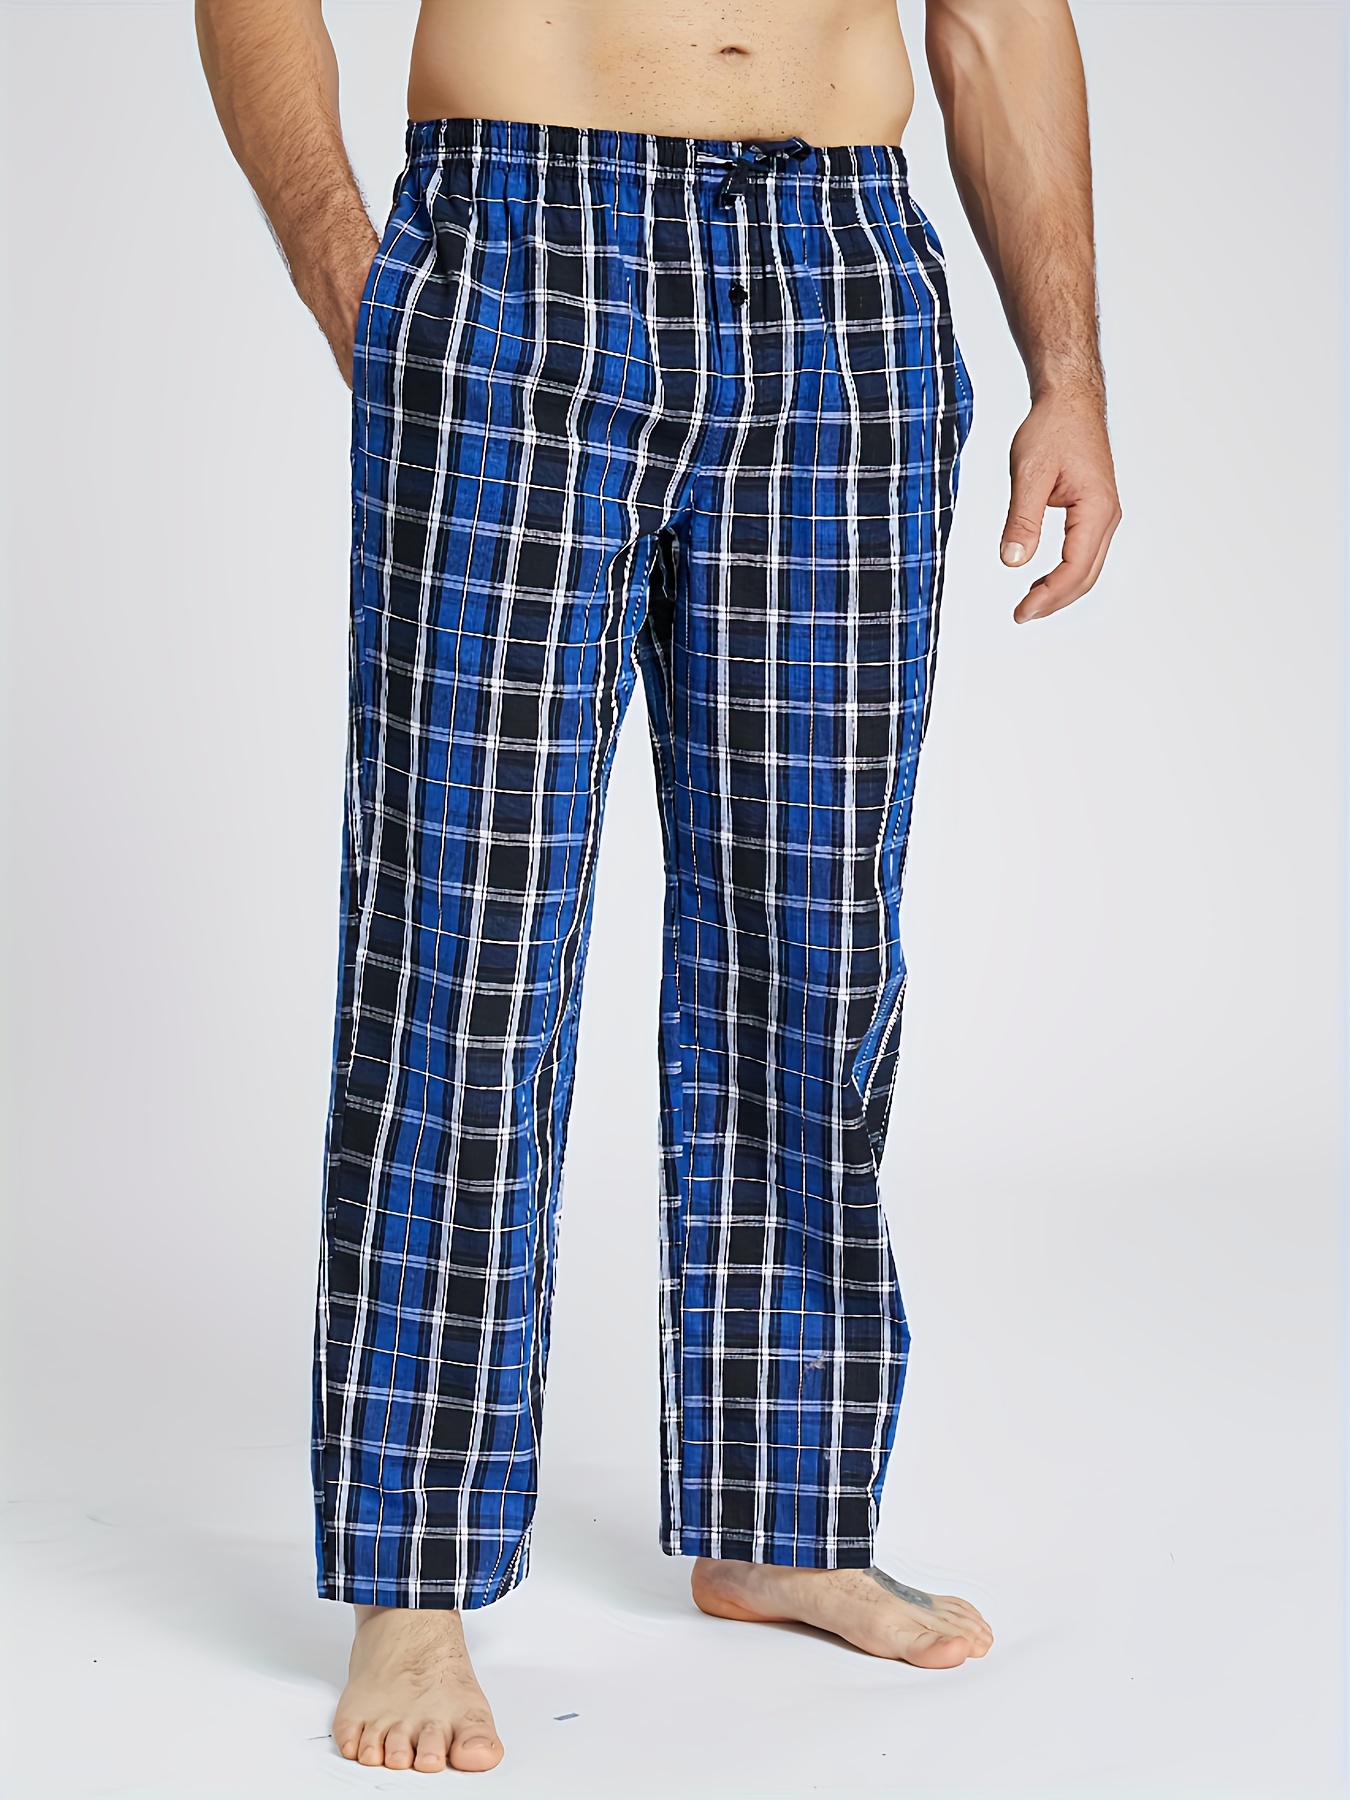 Pajama Bottoms Women's Pockets And Drawstring Comfort Plaid Lounge Pants  Casual Stretch Cotton Pajama Bottoms Soft Pajamas